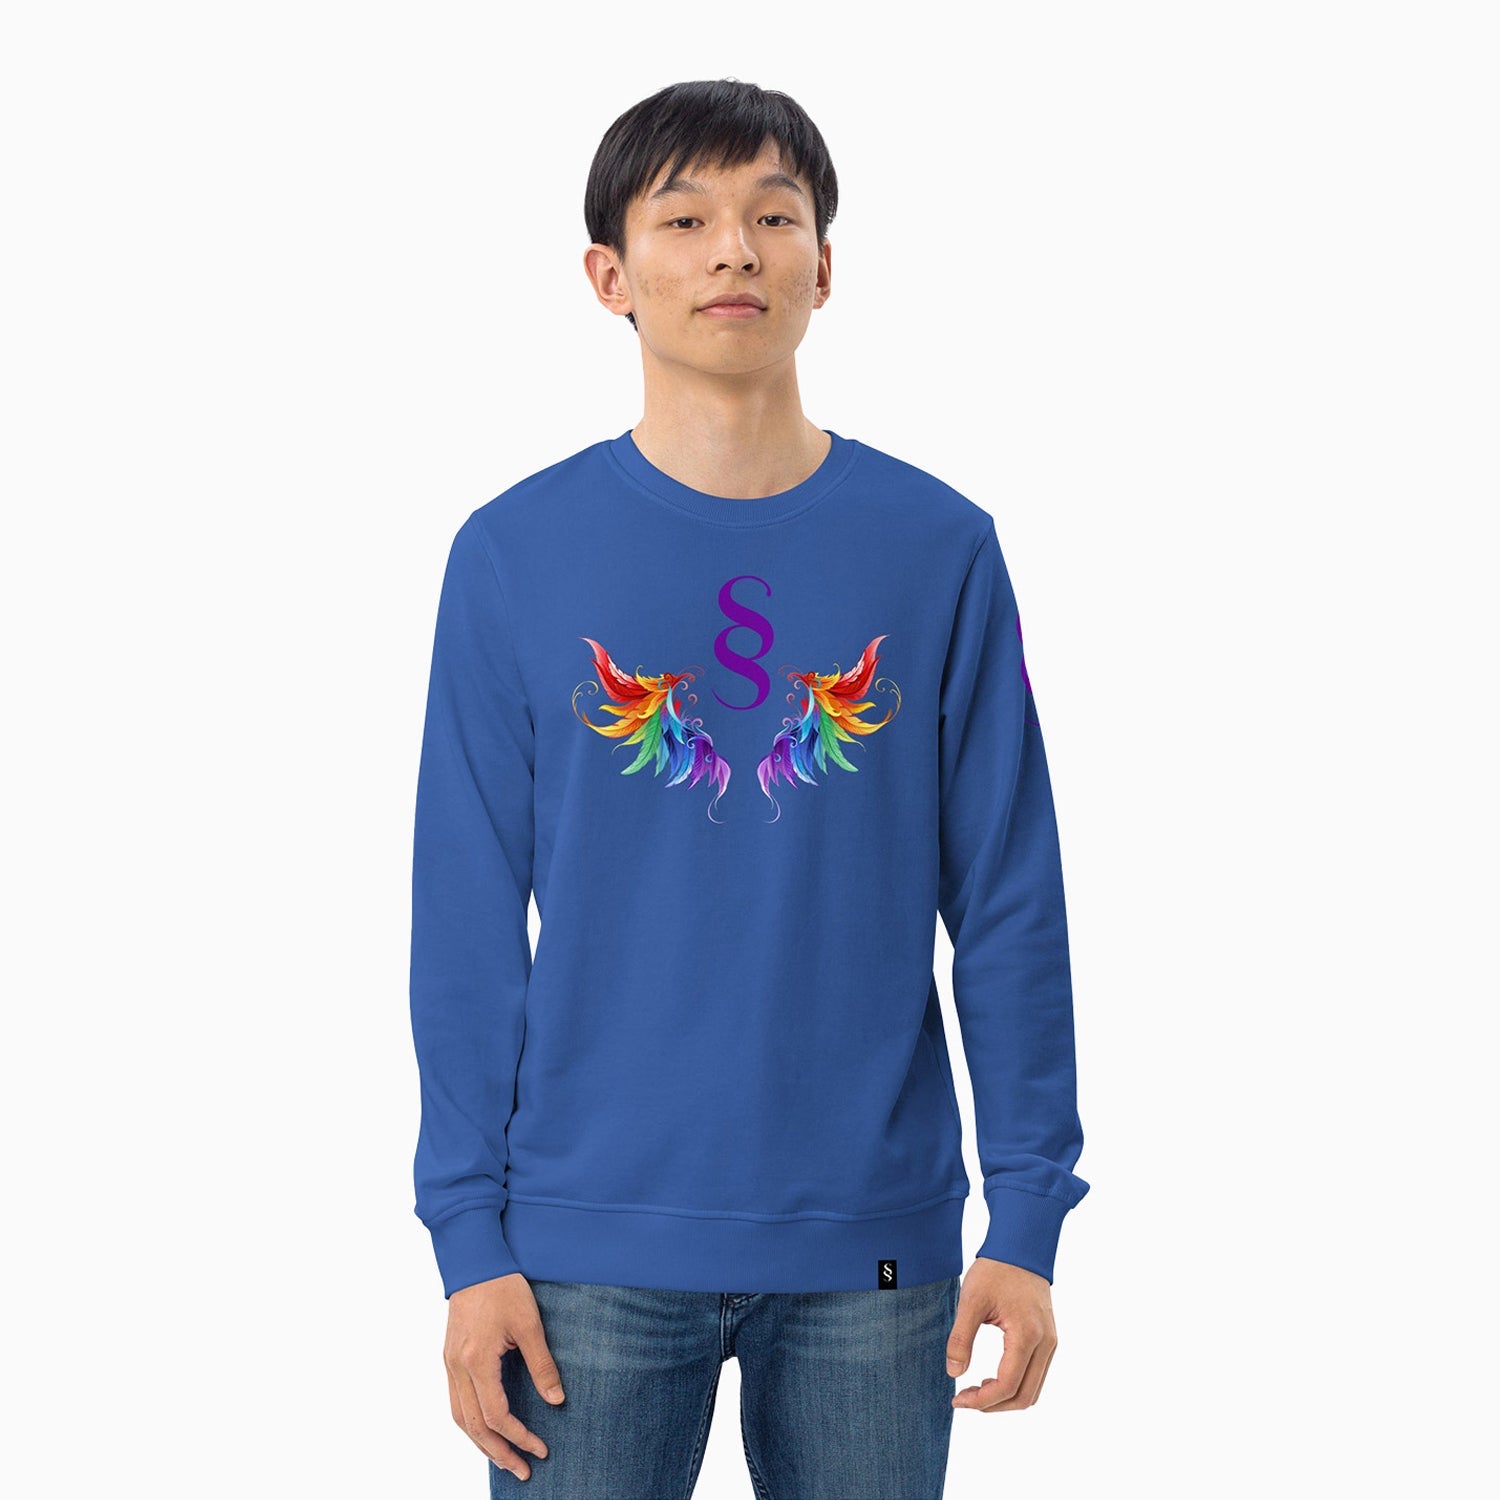 fluffy-design-printed-crew-neck-royal-blue-sweatshirt-for-men-sc110-480